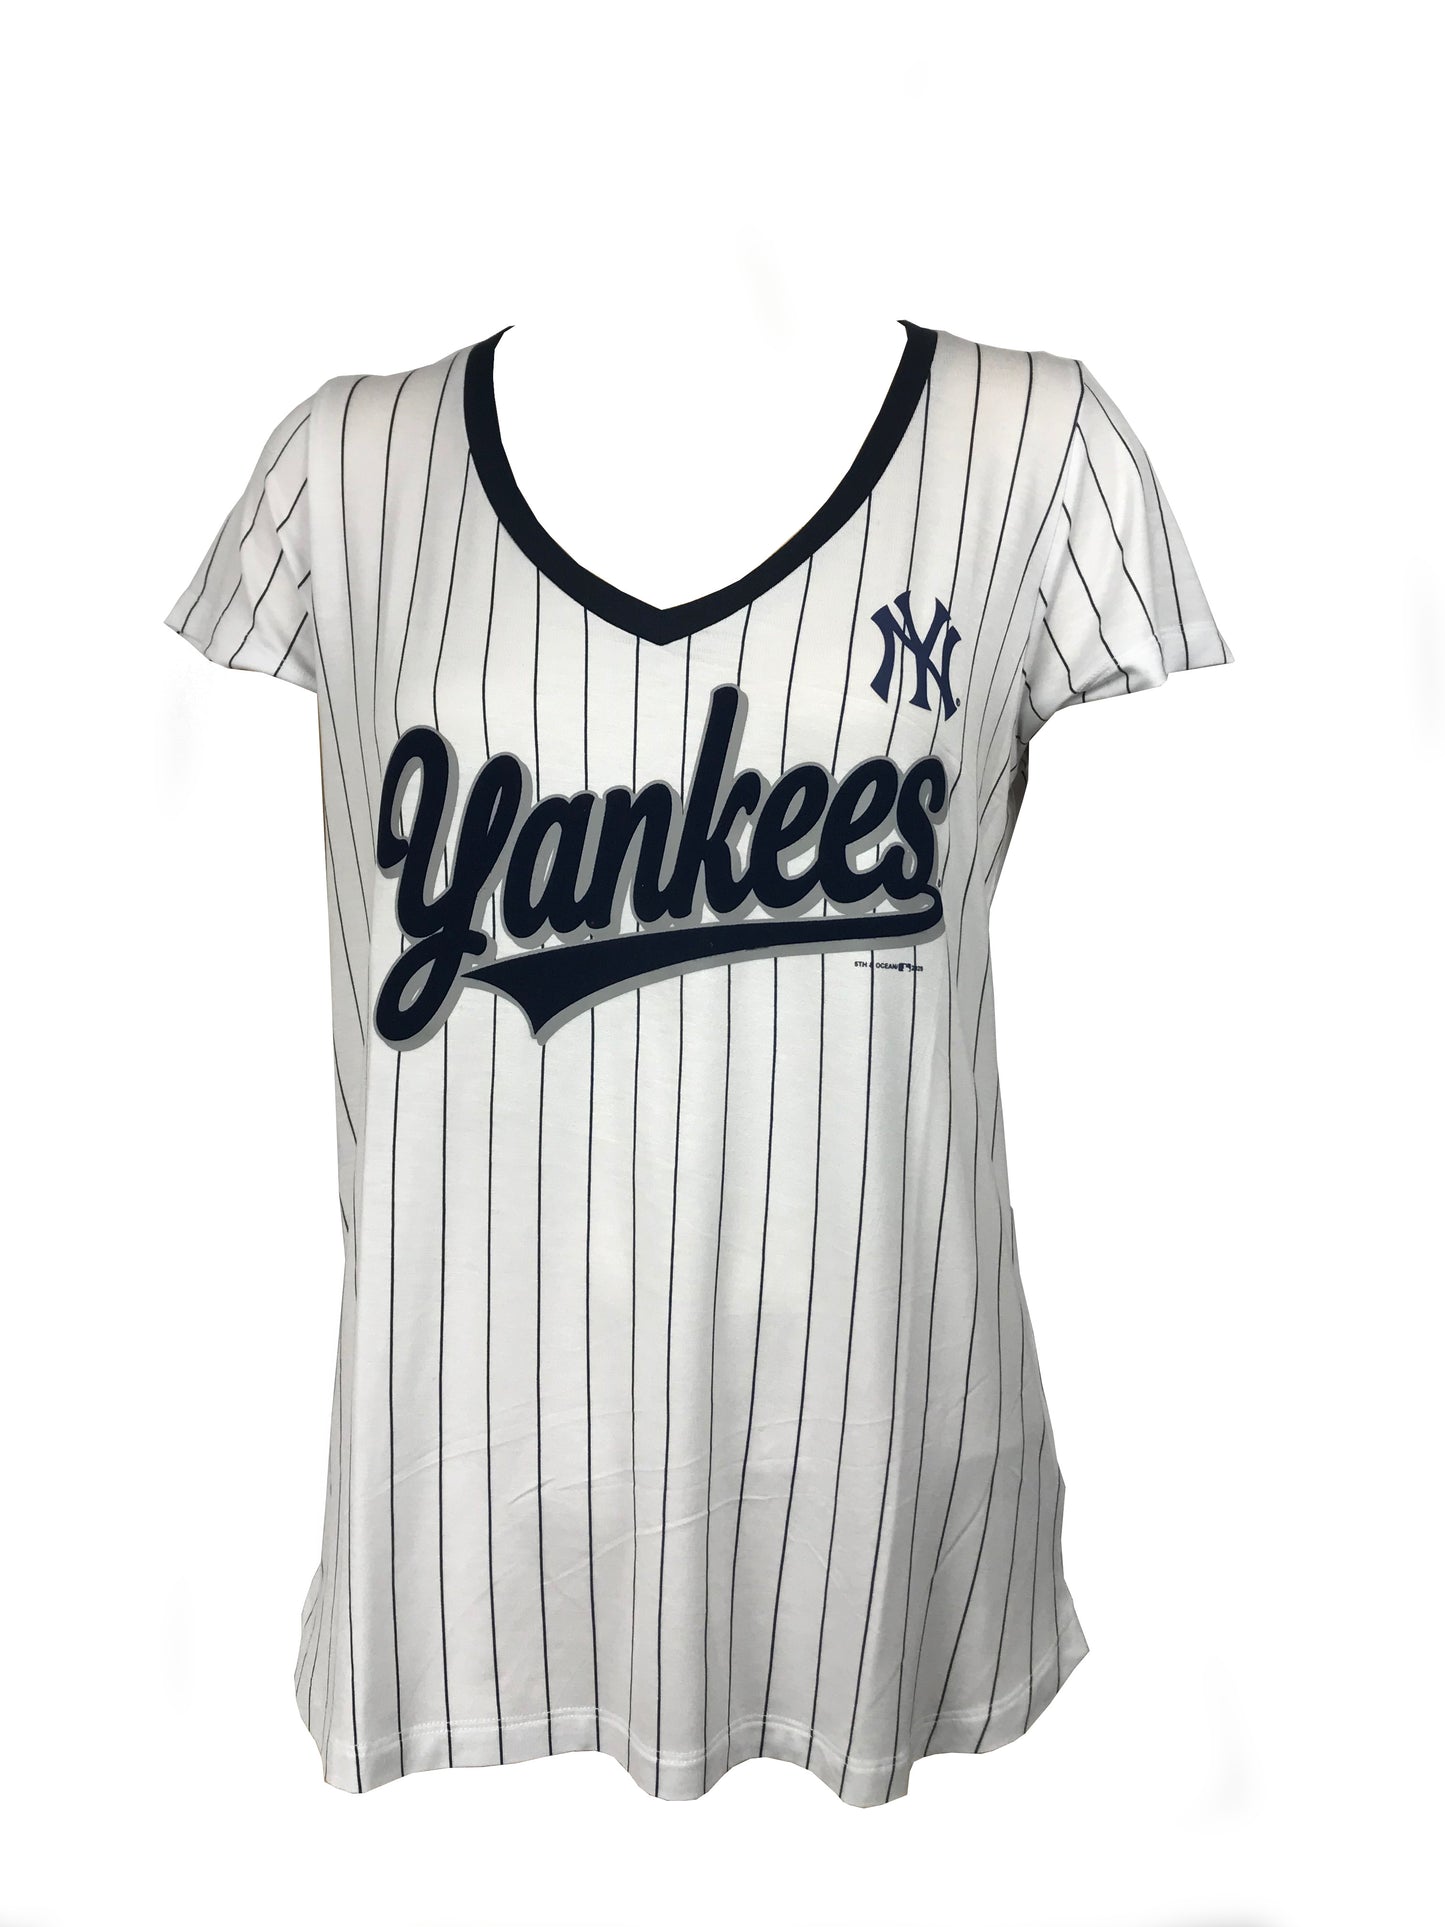 new york yankees dress shirt